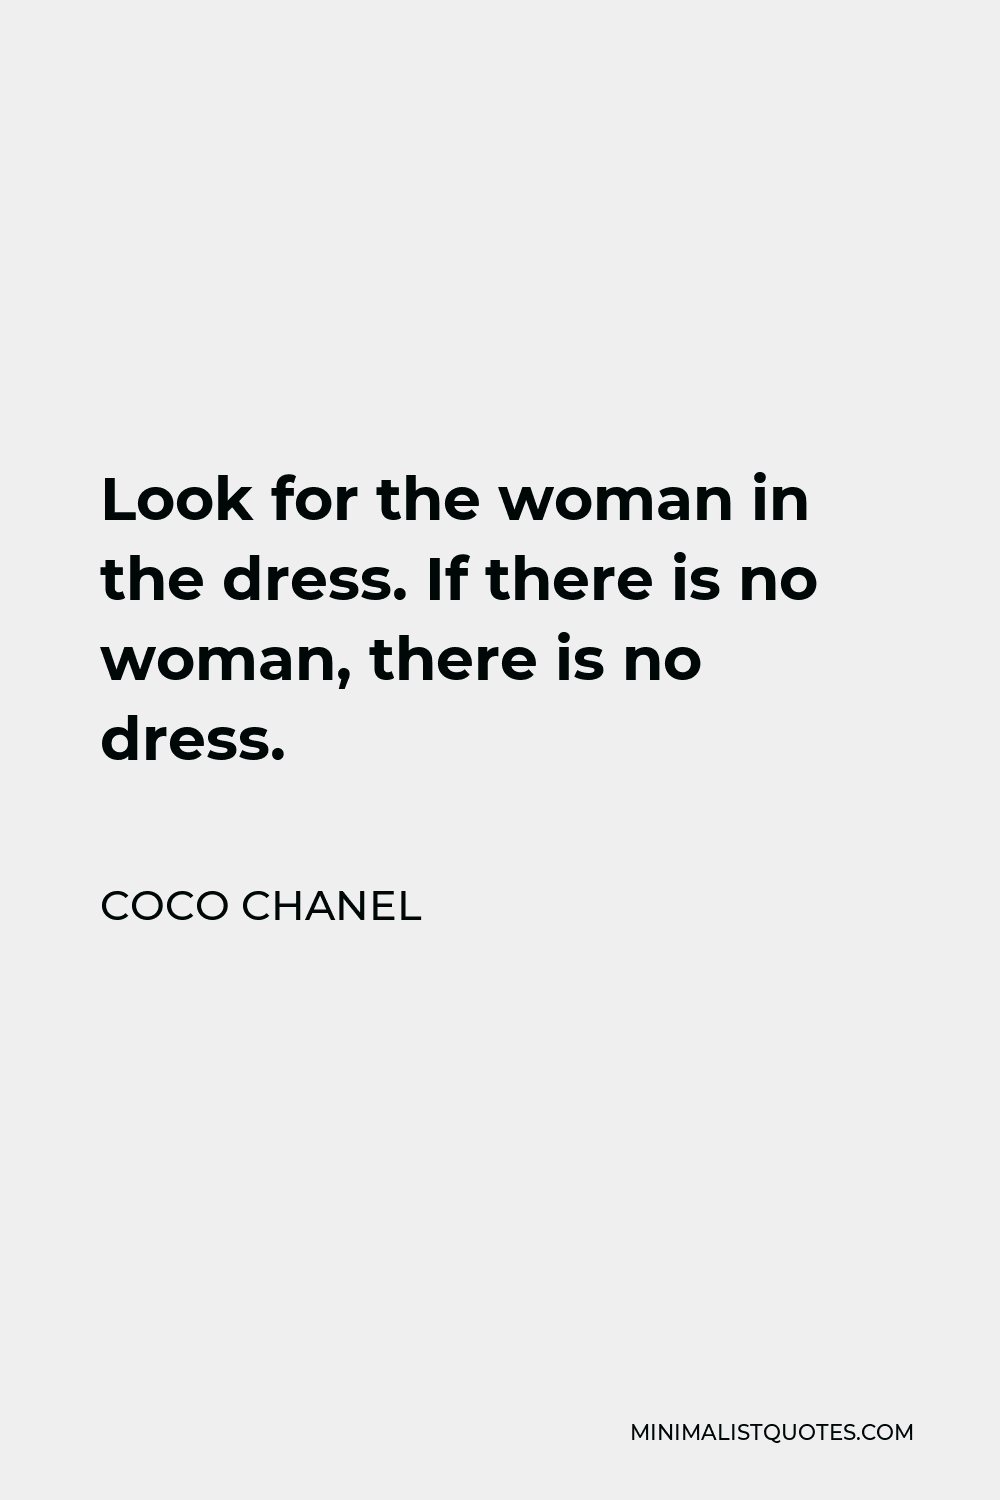 Fashion #Quotes #Dress #kill | Stylish quote, Quotes, Design quotes